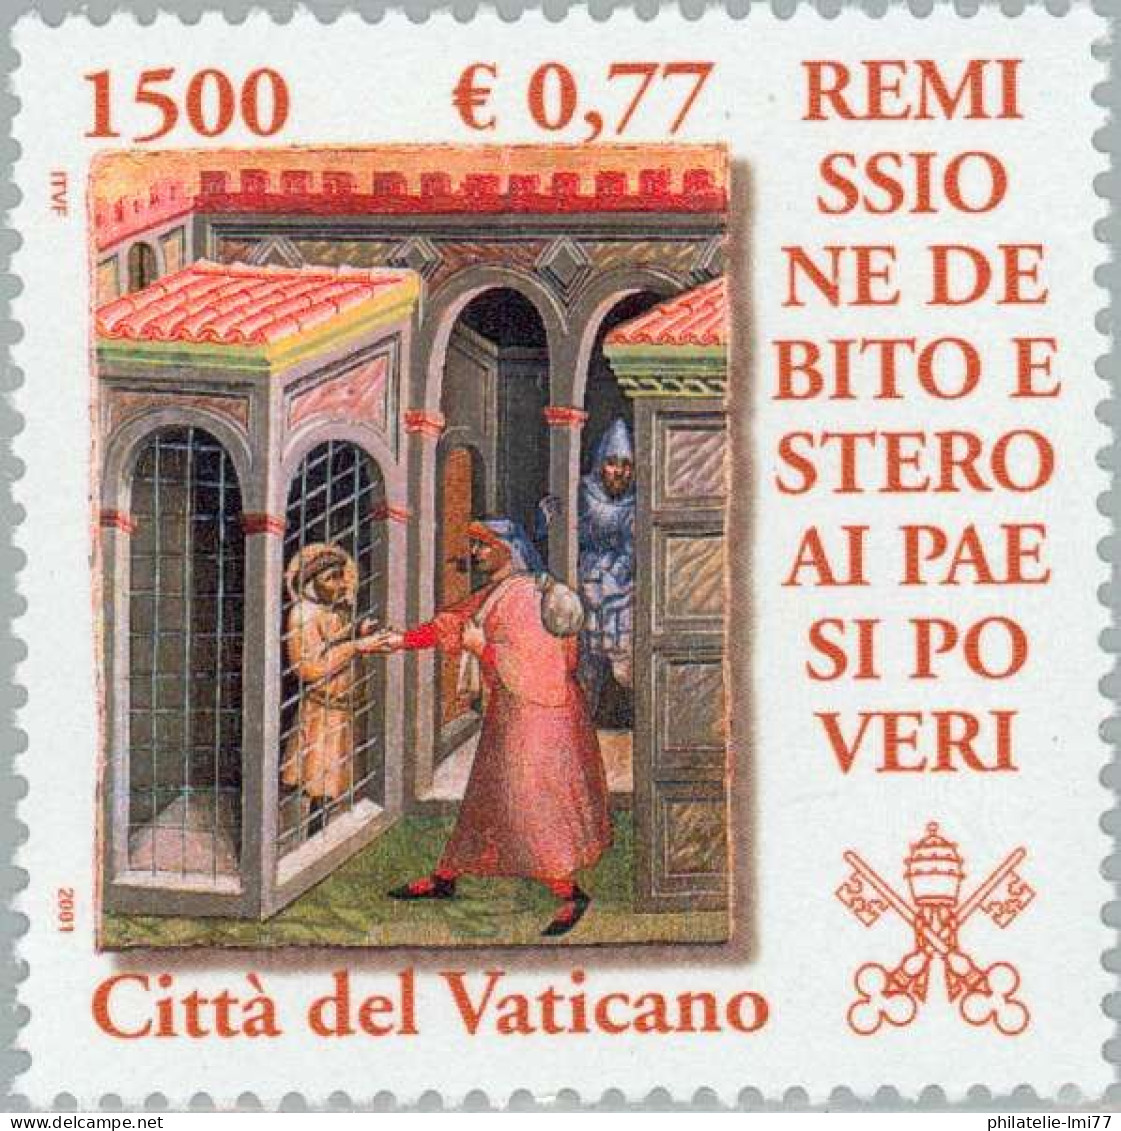 Timbre Du Vatican N° 1241 Neuf Sans Charnière - Ungebraucht